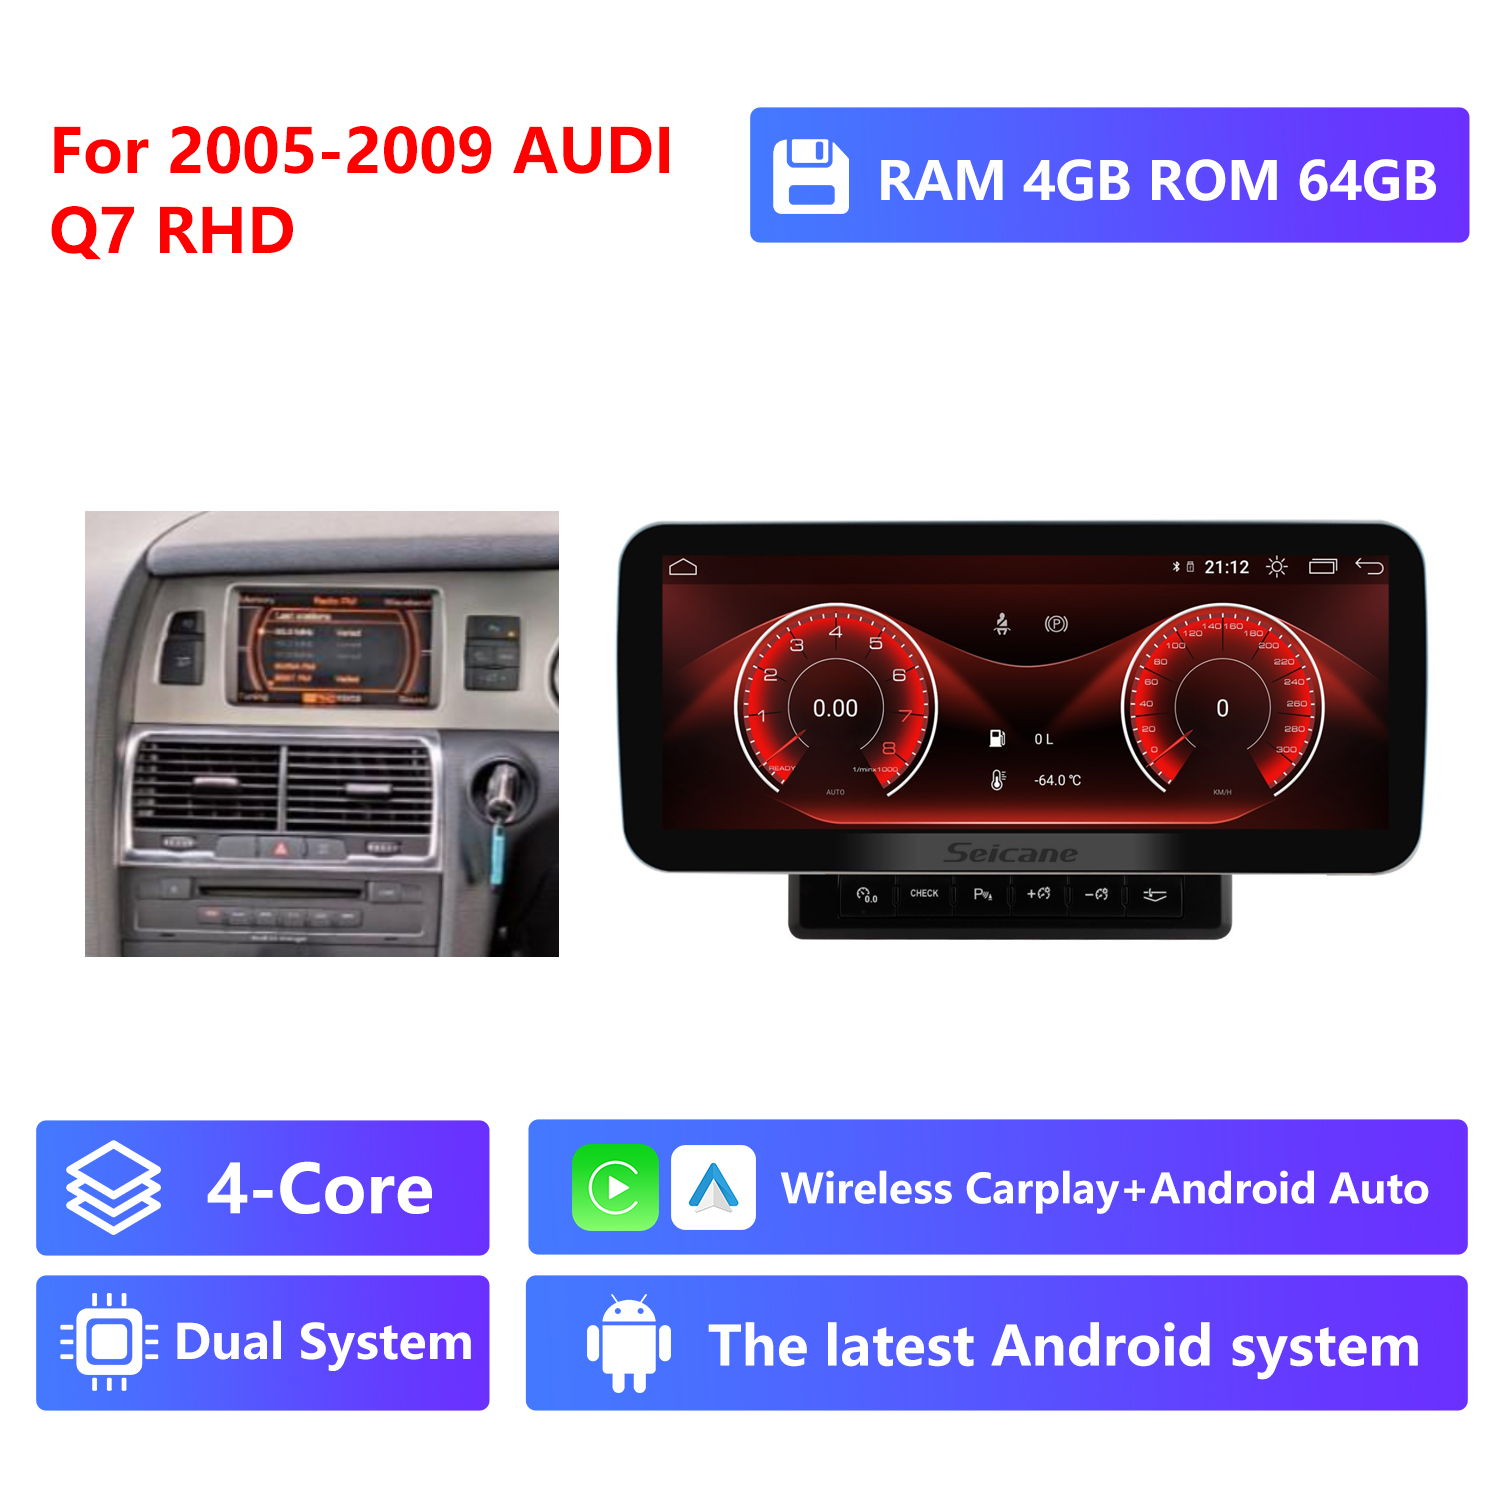 4-Core RAM 4G ROM 64G,2005-2009,RHD